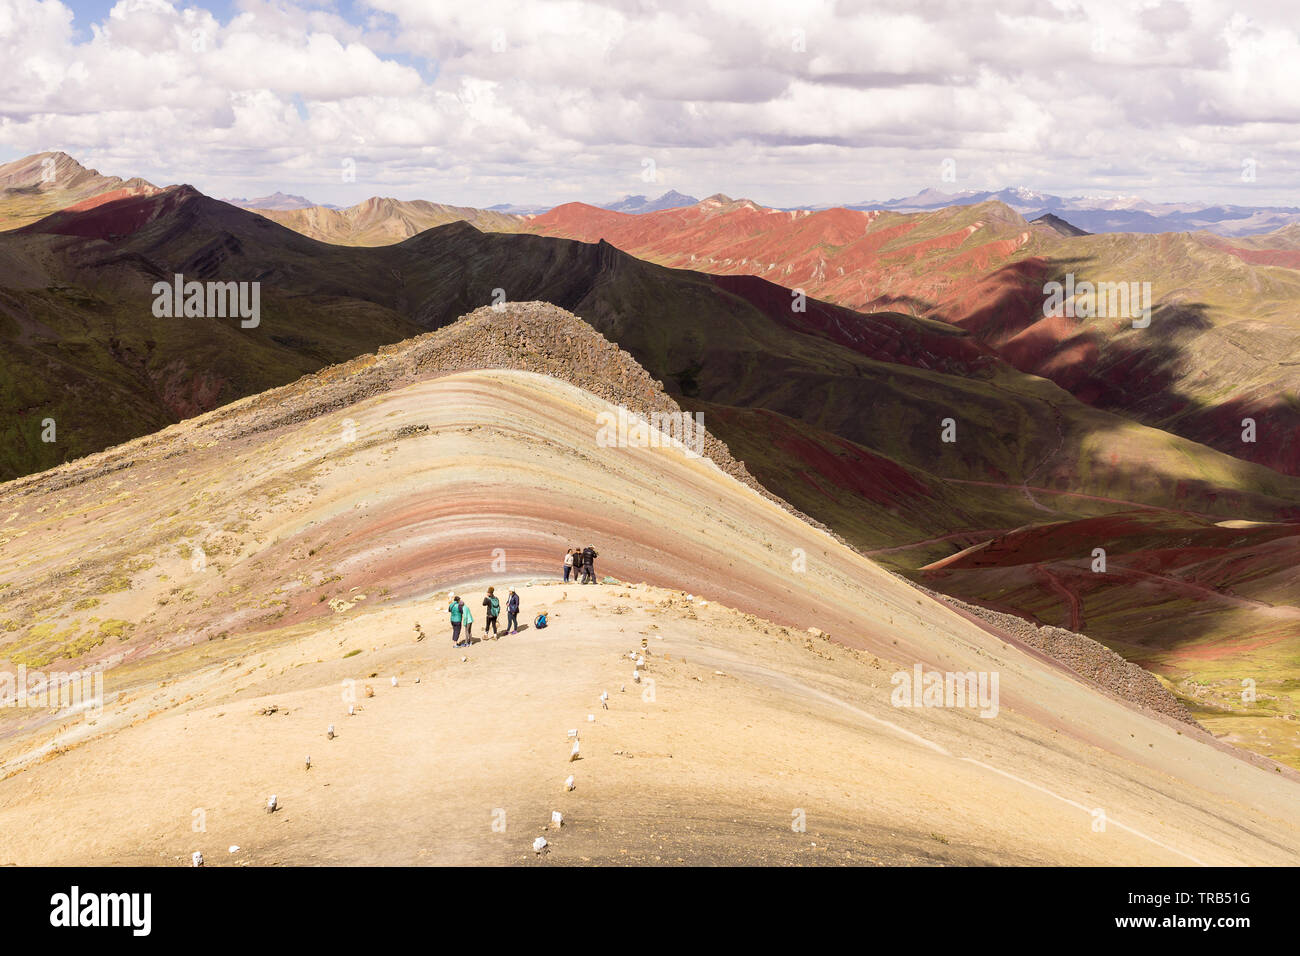 Peru Palccoyo Berg (alternative Rainbow Berg) - Leute Trekking entlang den Hängen der bunten Palccoyo Berg in Peru, Südamerika. Stockfoto